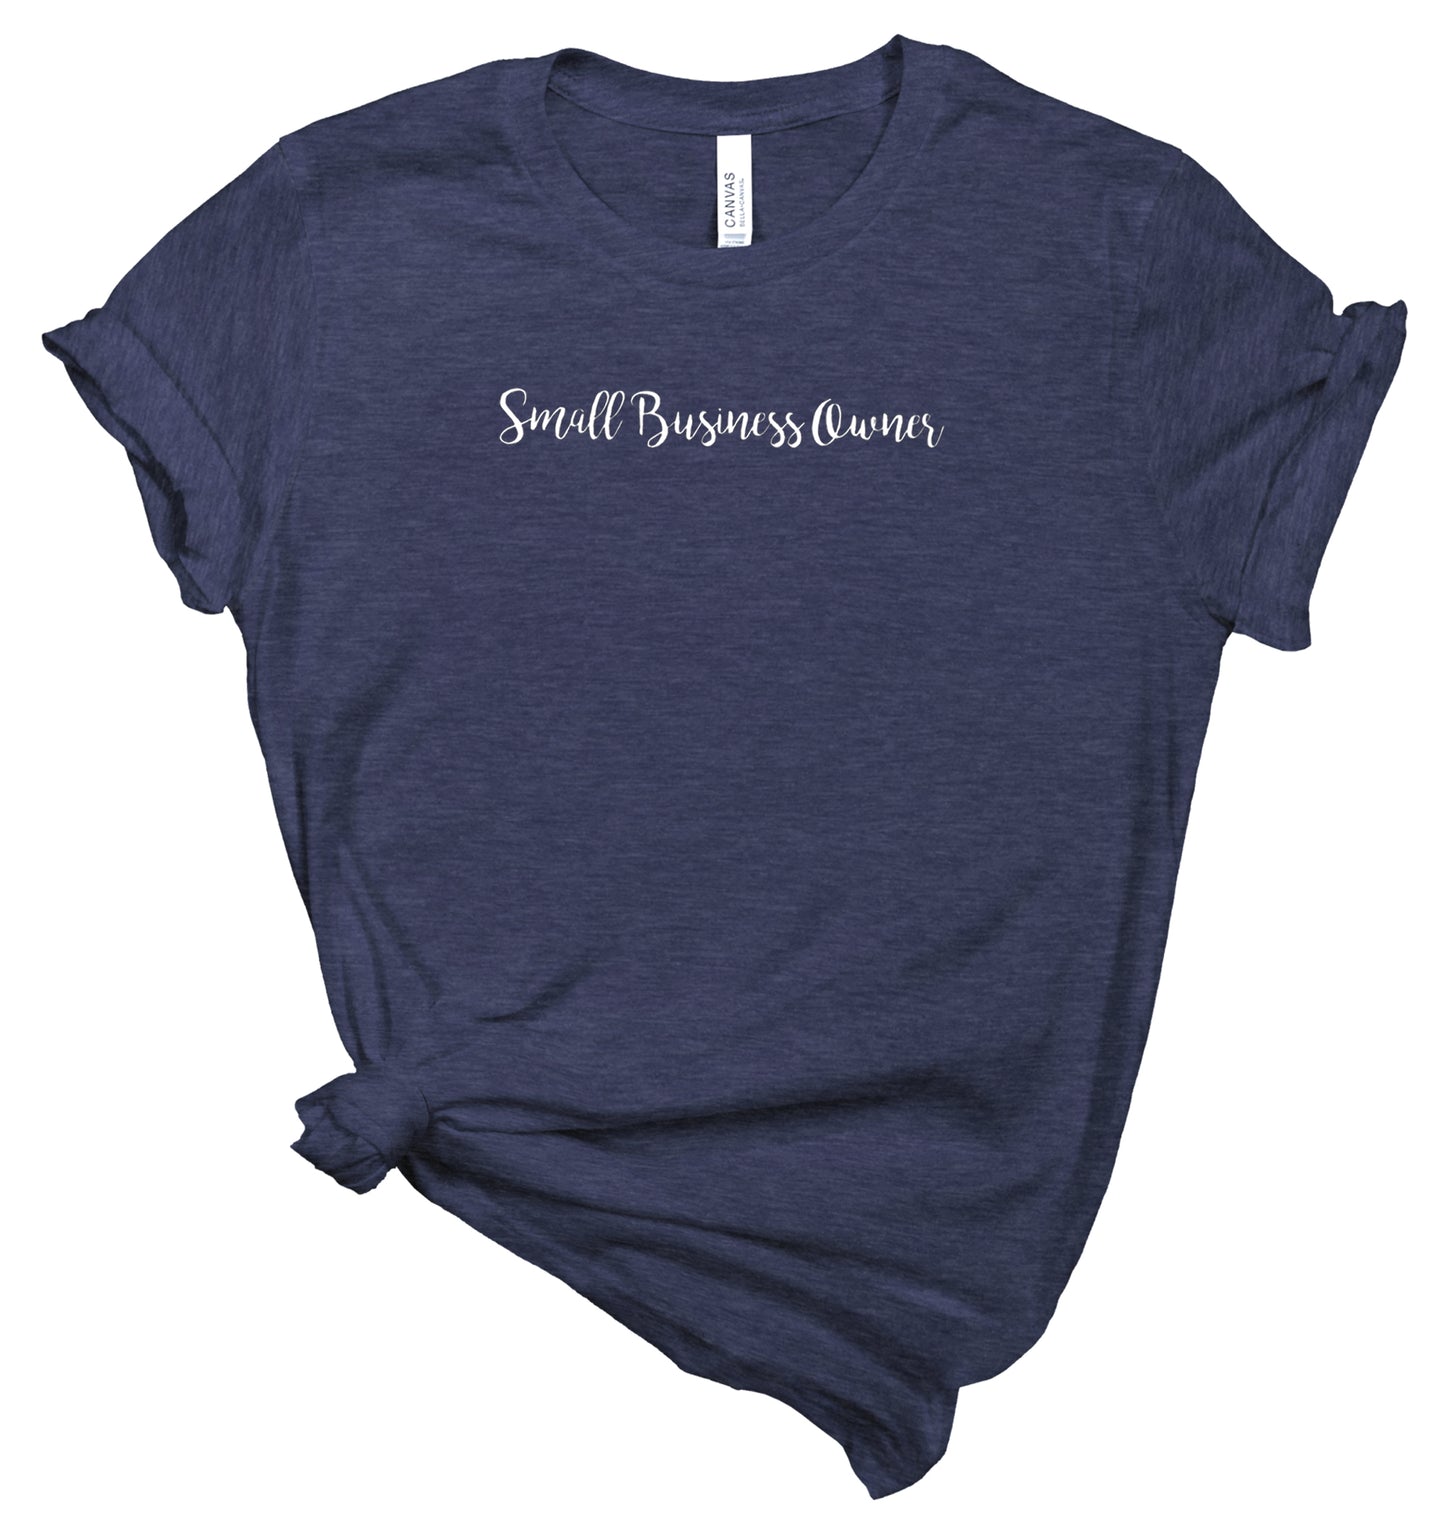 Small Business Owner Minimalist T-Shirt